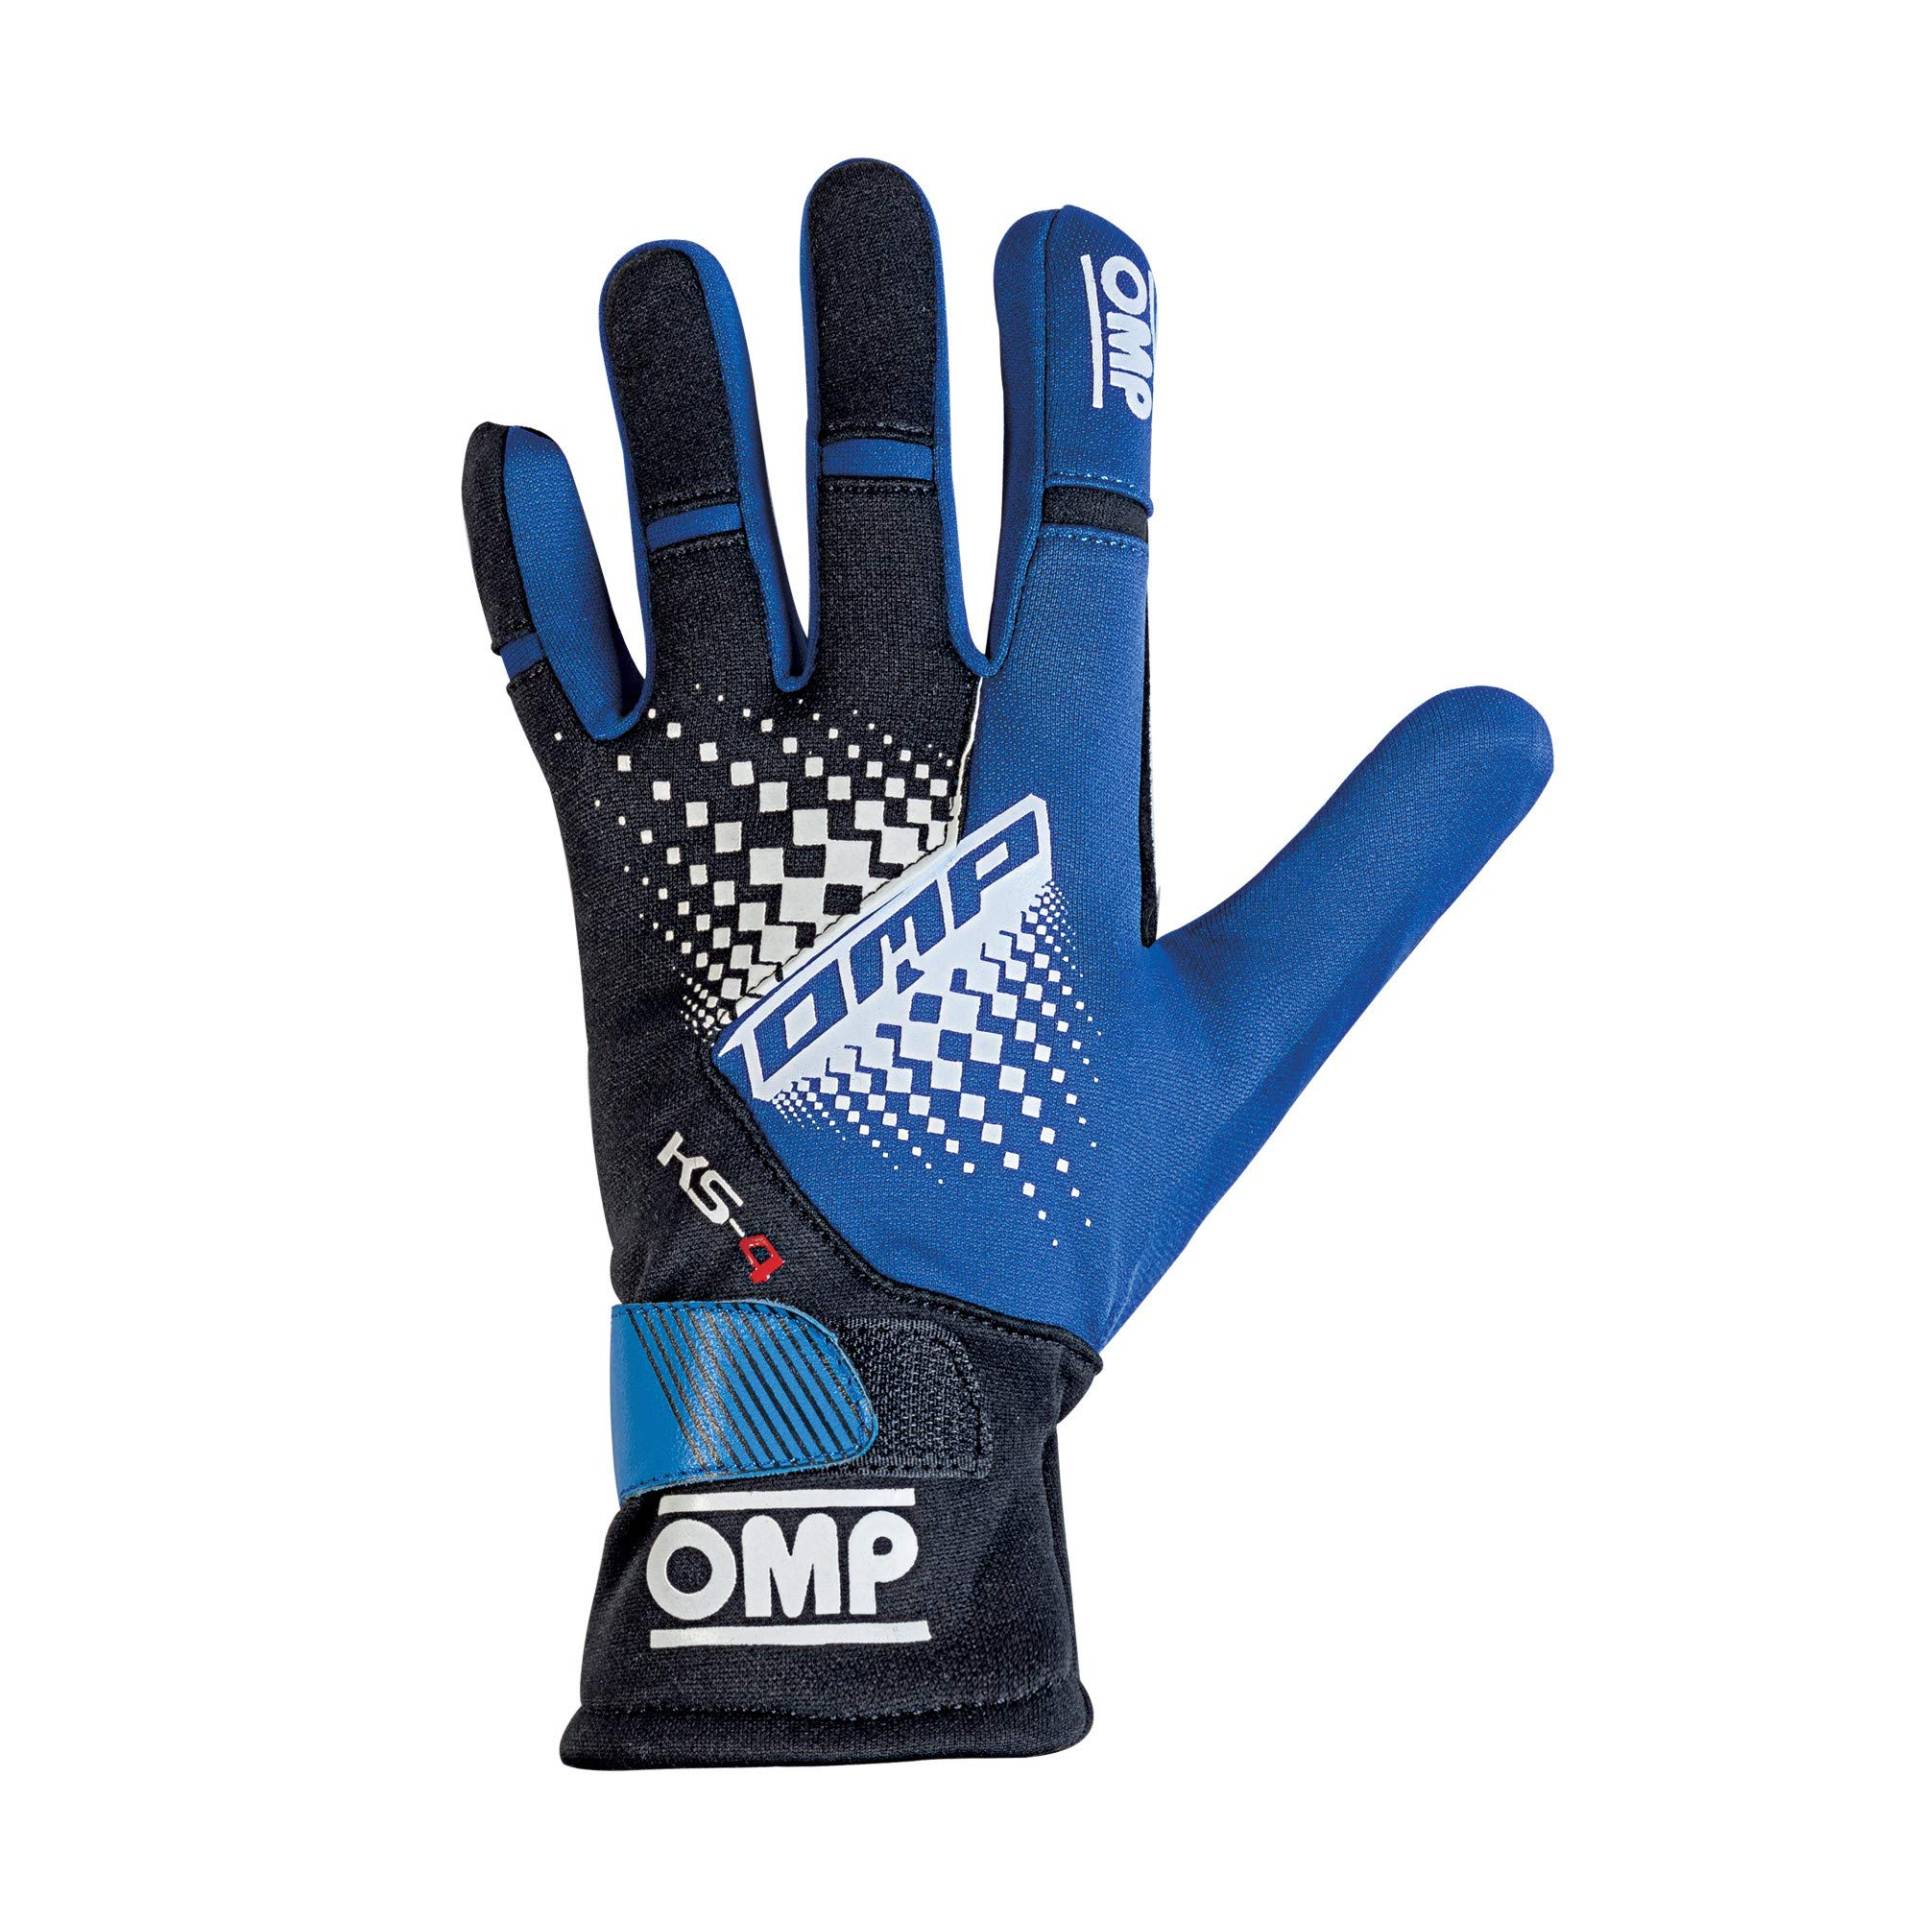 OMP OMPKK02744E146006 Ks-4 My2018 Handschuhe schwarz / blau Size 6 von OMP